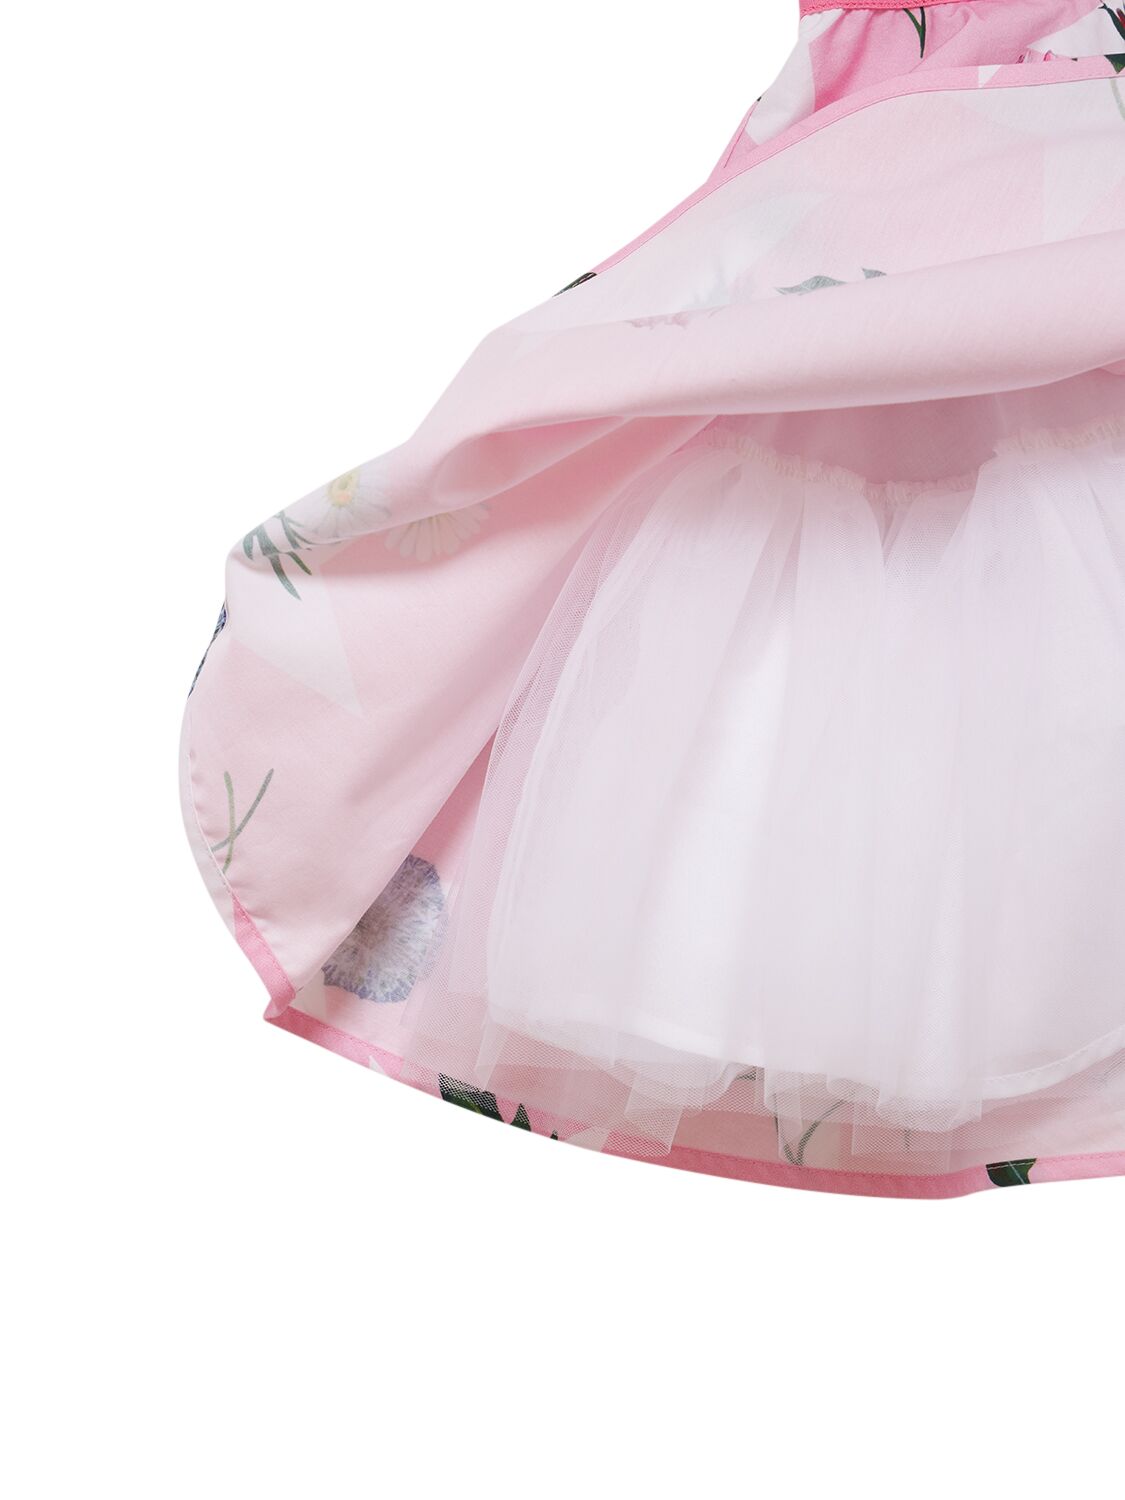 Shop Monnalisa Printed Cotton Poplin Dress In Pink,multi